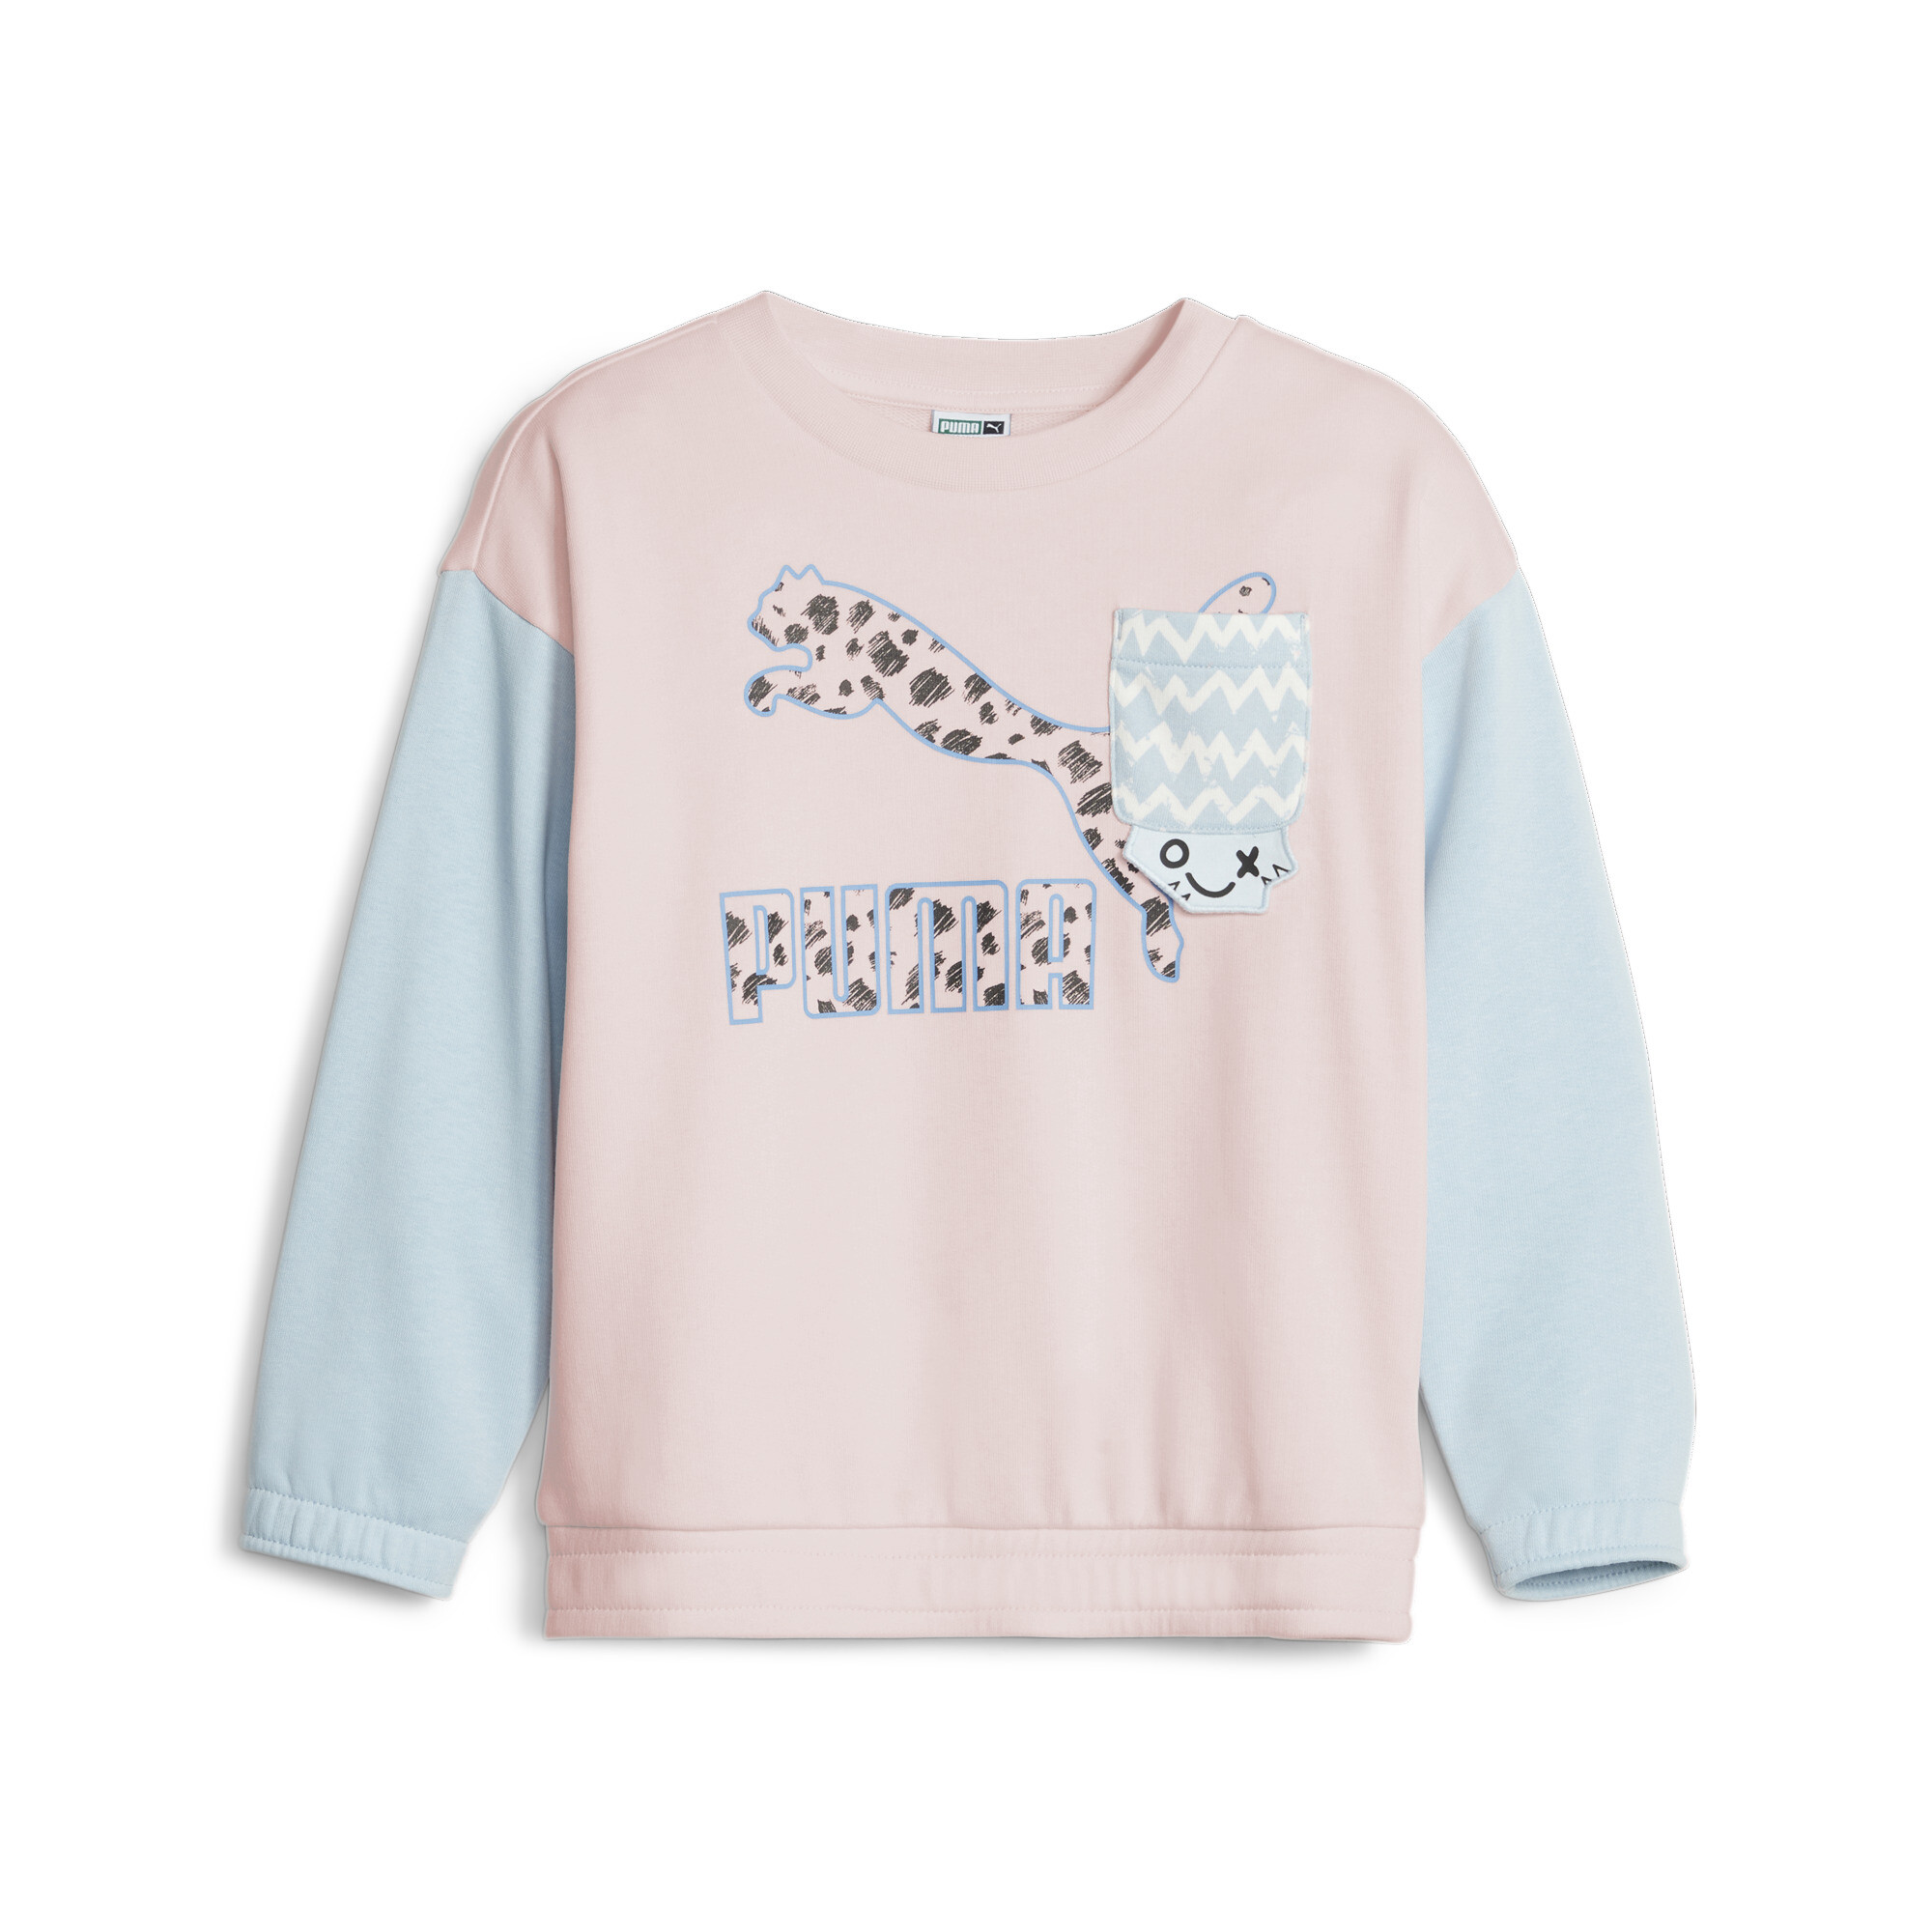 PUMA Classics Mix Match Sweatshirt In Pink, Size 3-4 Youth